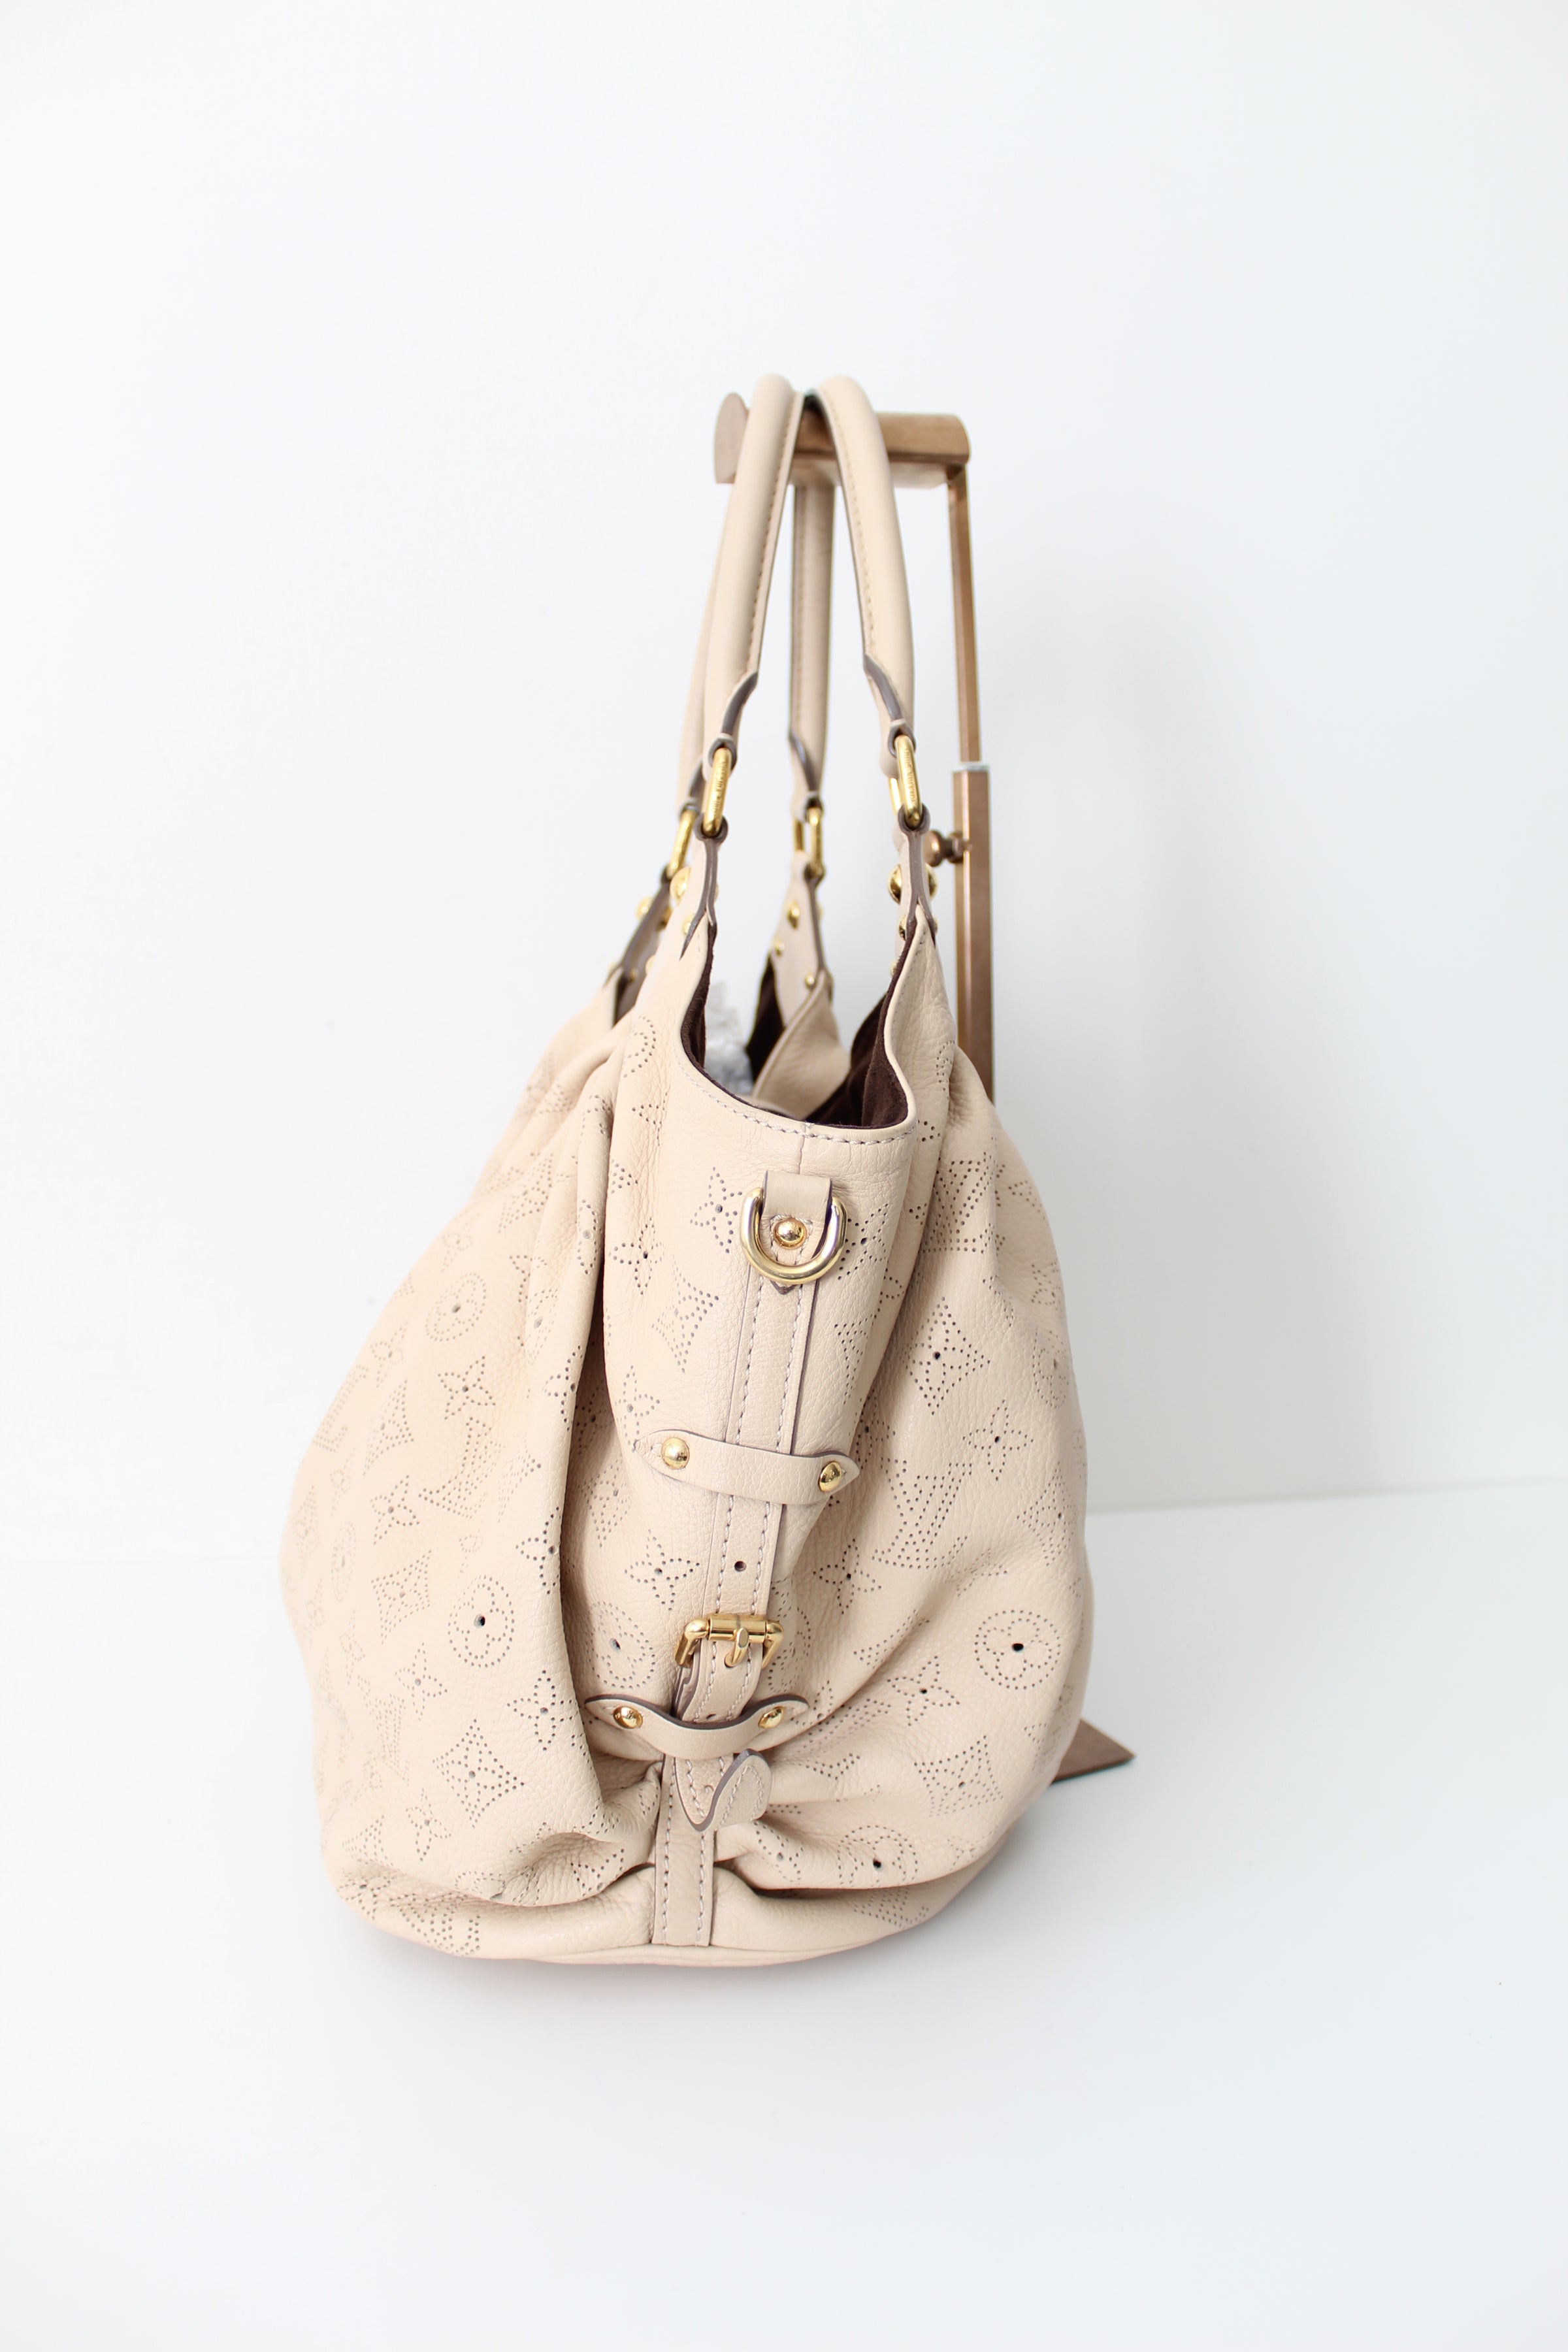 Louis Vuitton Mahina Leather Bag (Cream/Beige)